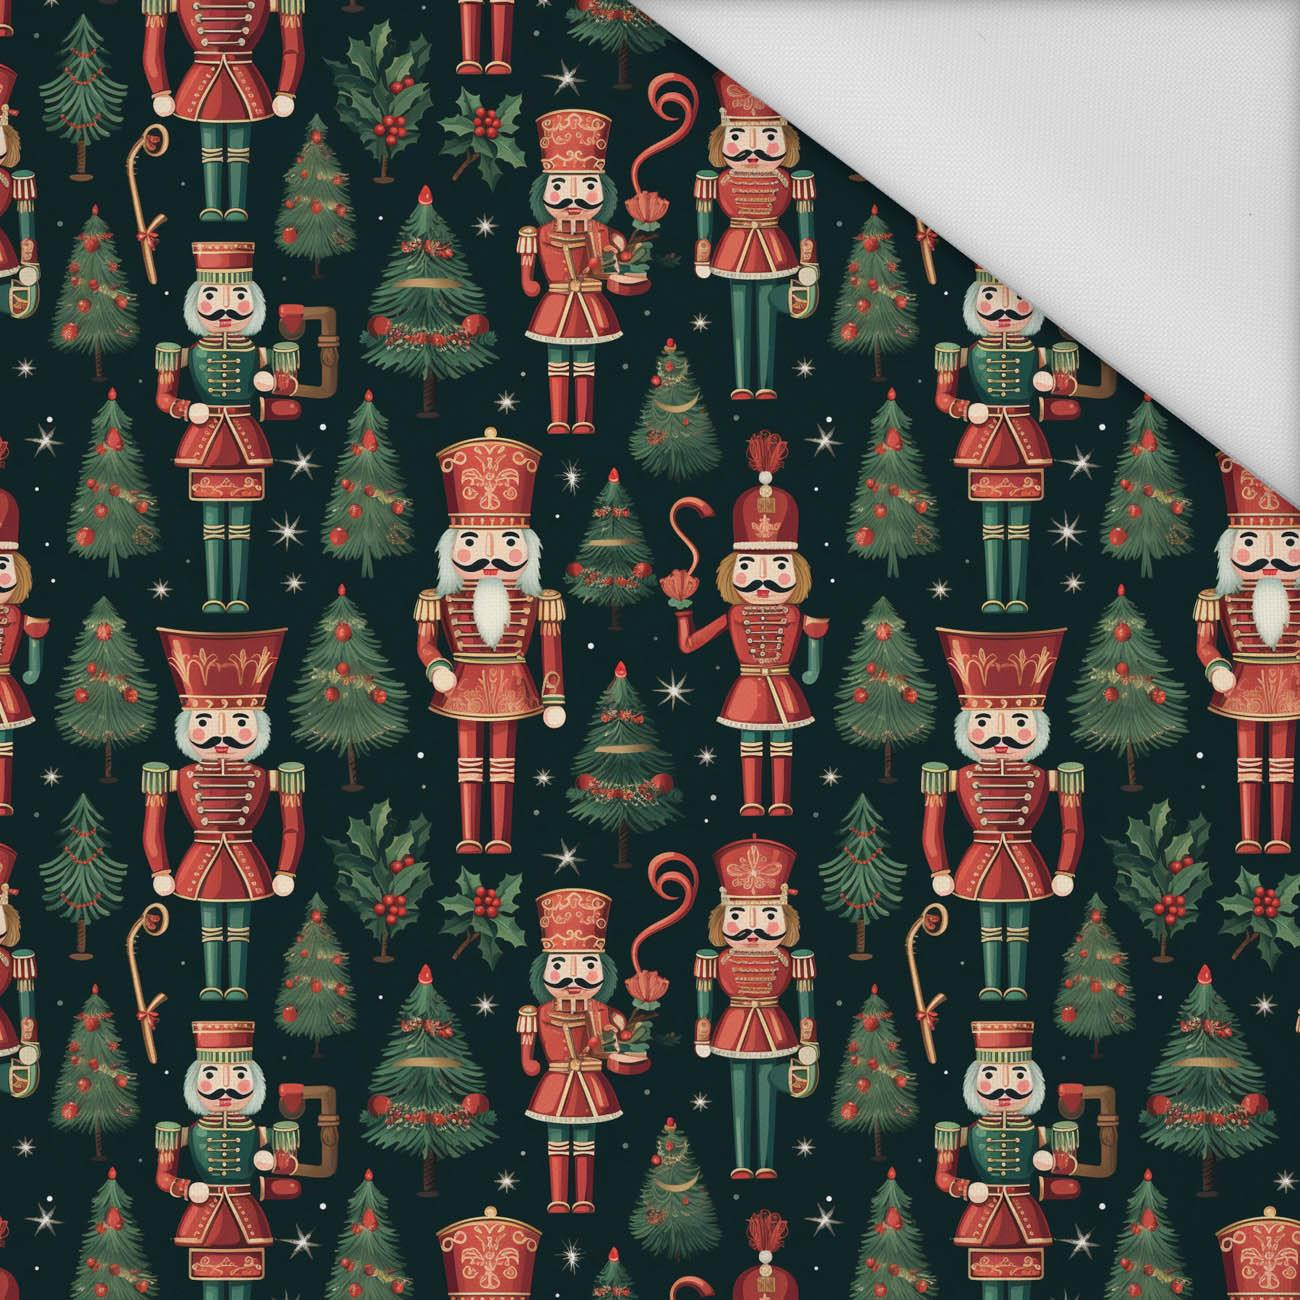 CHRISTMAS NUTCRACKER - Waterproof woven fabric